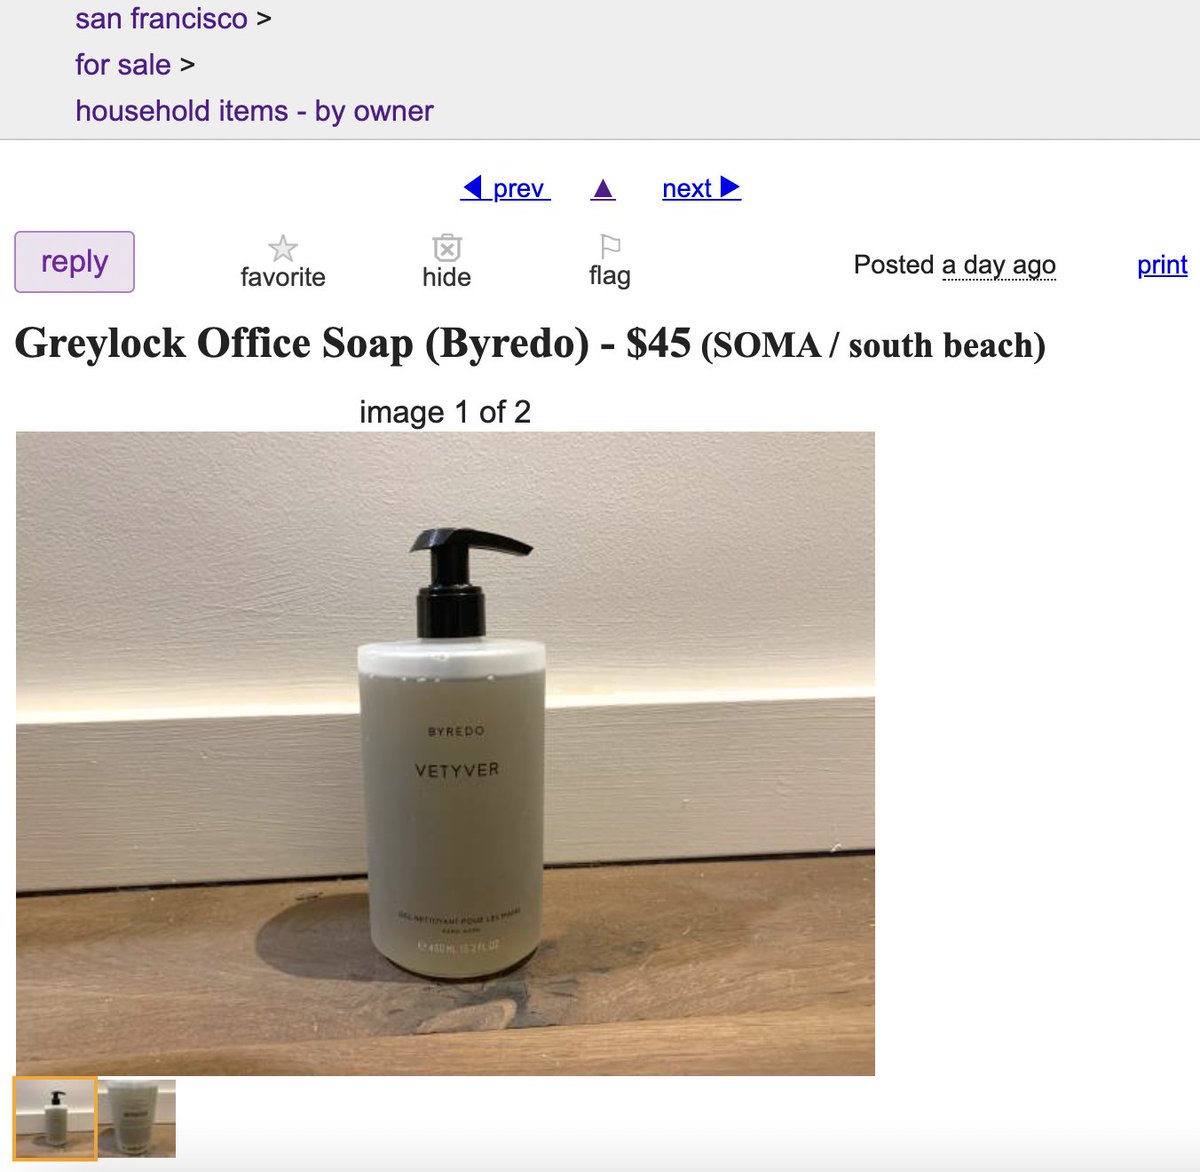 Um, I found Greylock's office bathroom soap on Craigslist for $45